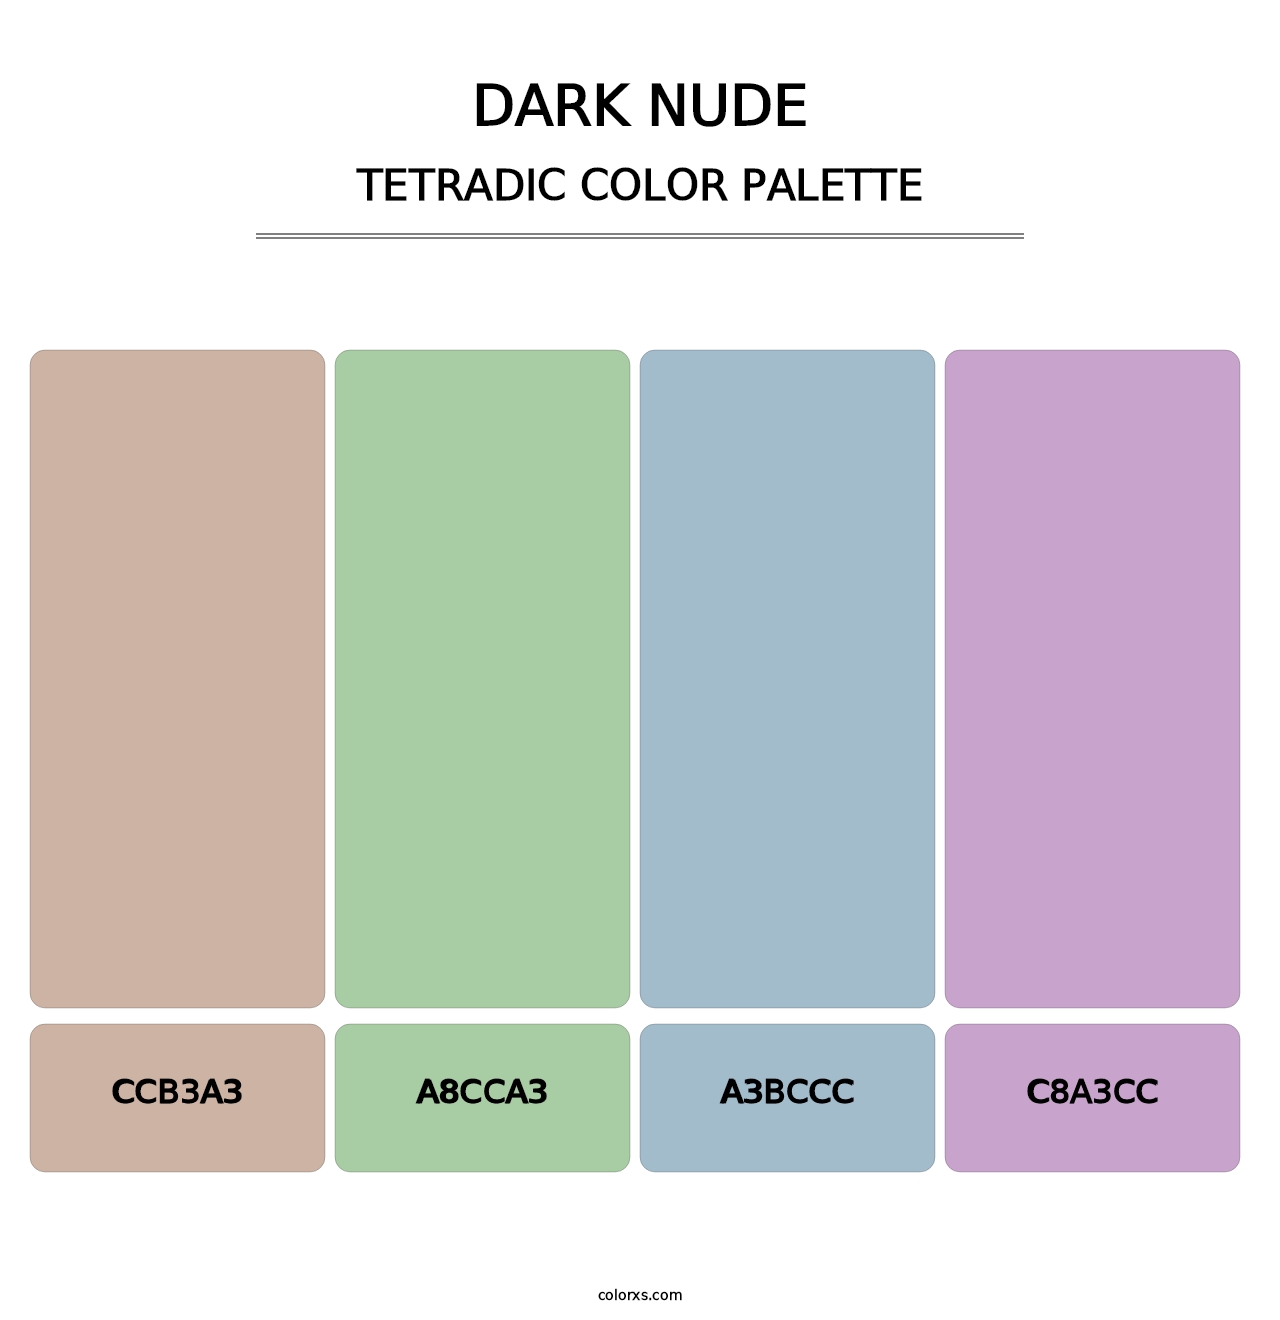 Dark Nude - Tetradic Color Palette